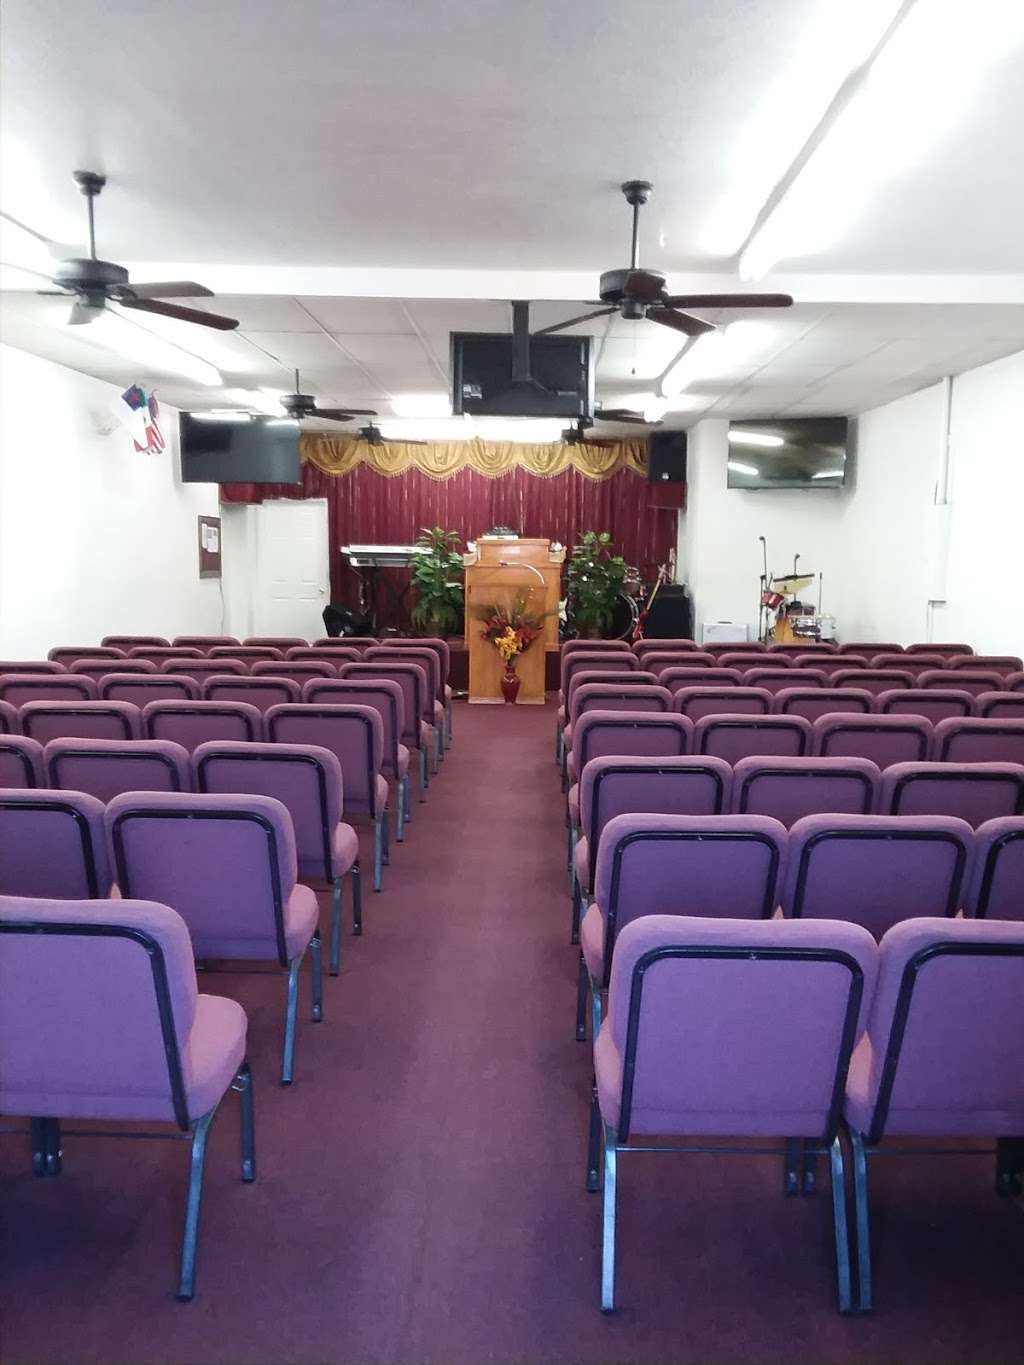 Iglesia Pentecostes Jesucristo "La Roca" | 3833 University Ave, San Diego, CA 92105, USA | Phone: (619) 527-2363